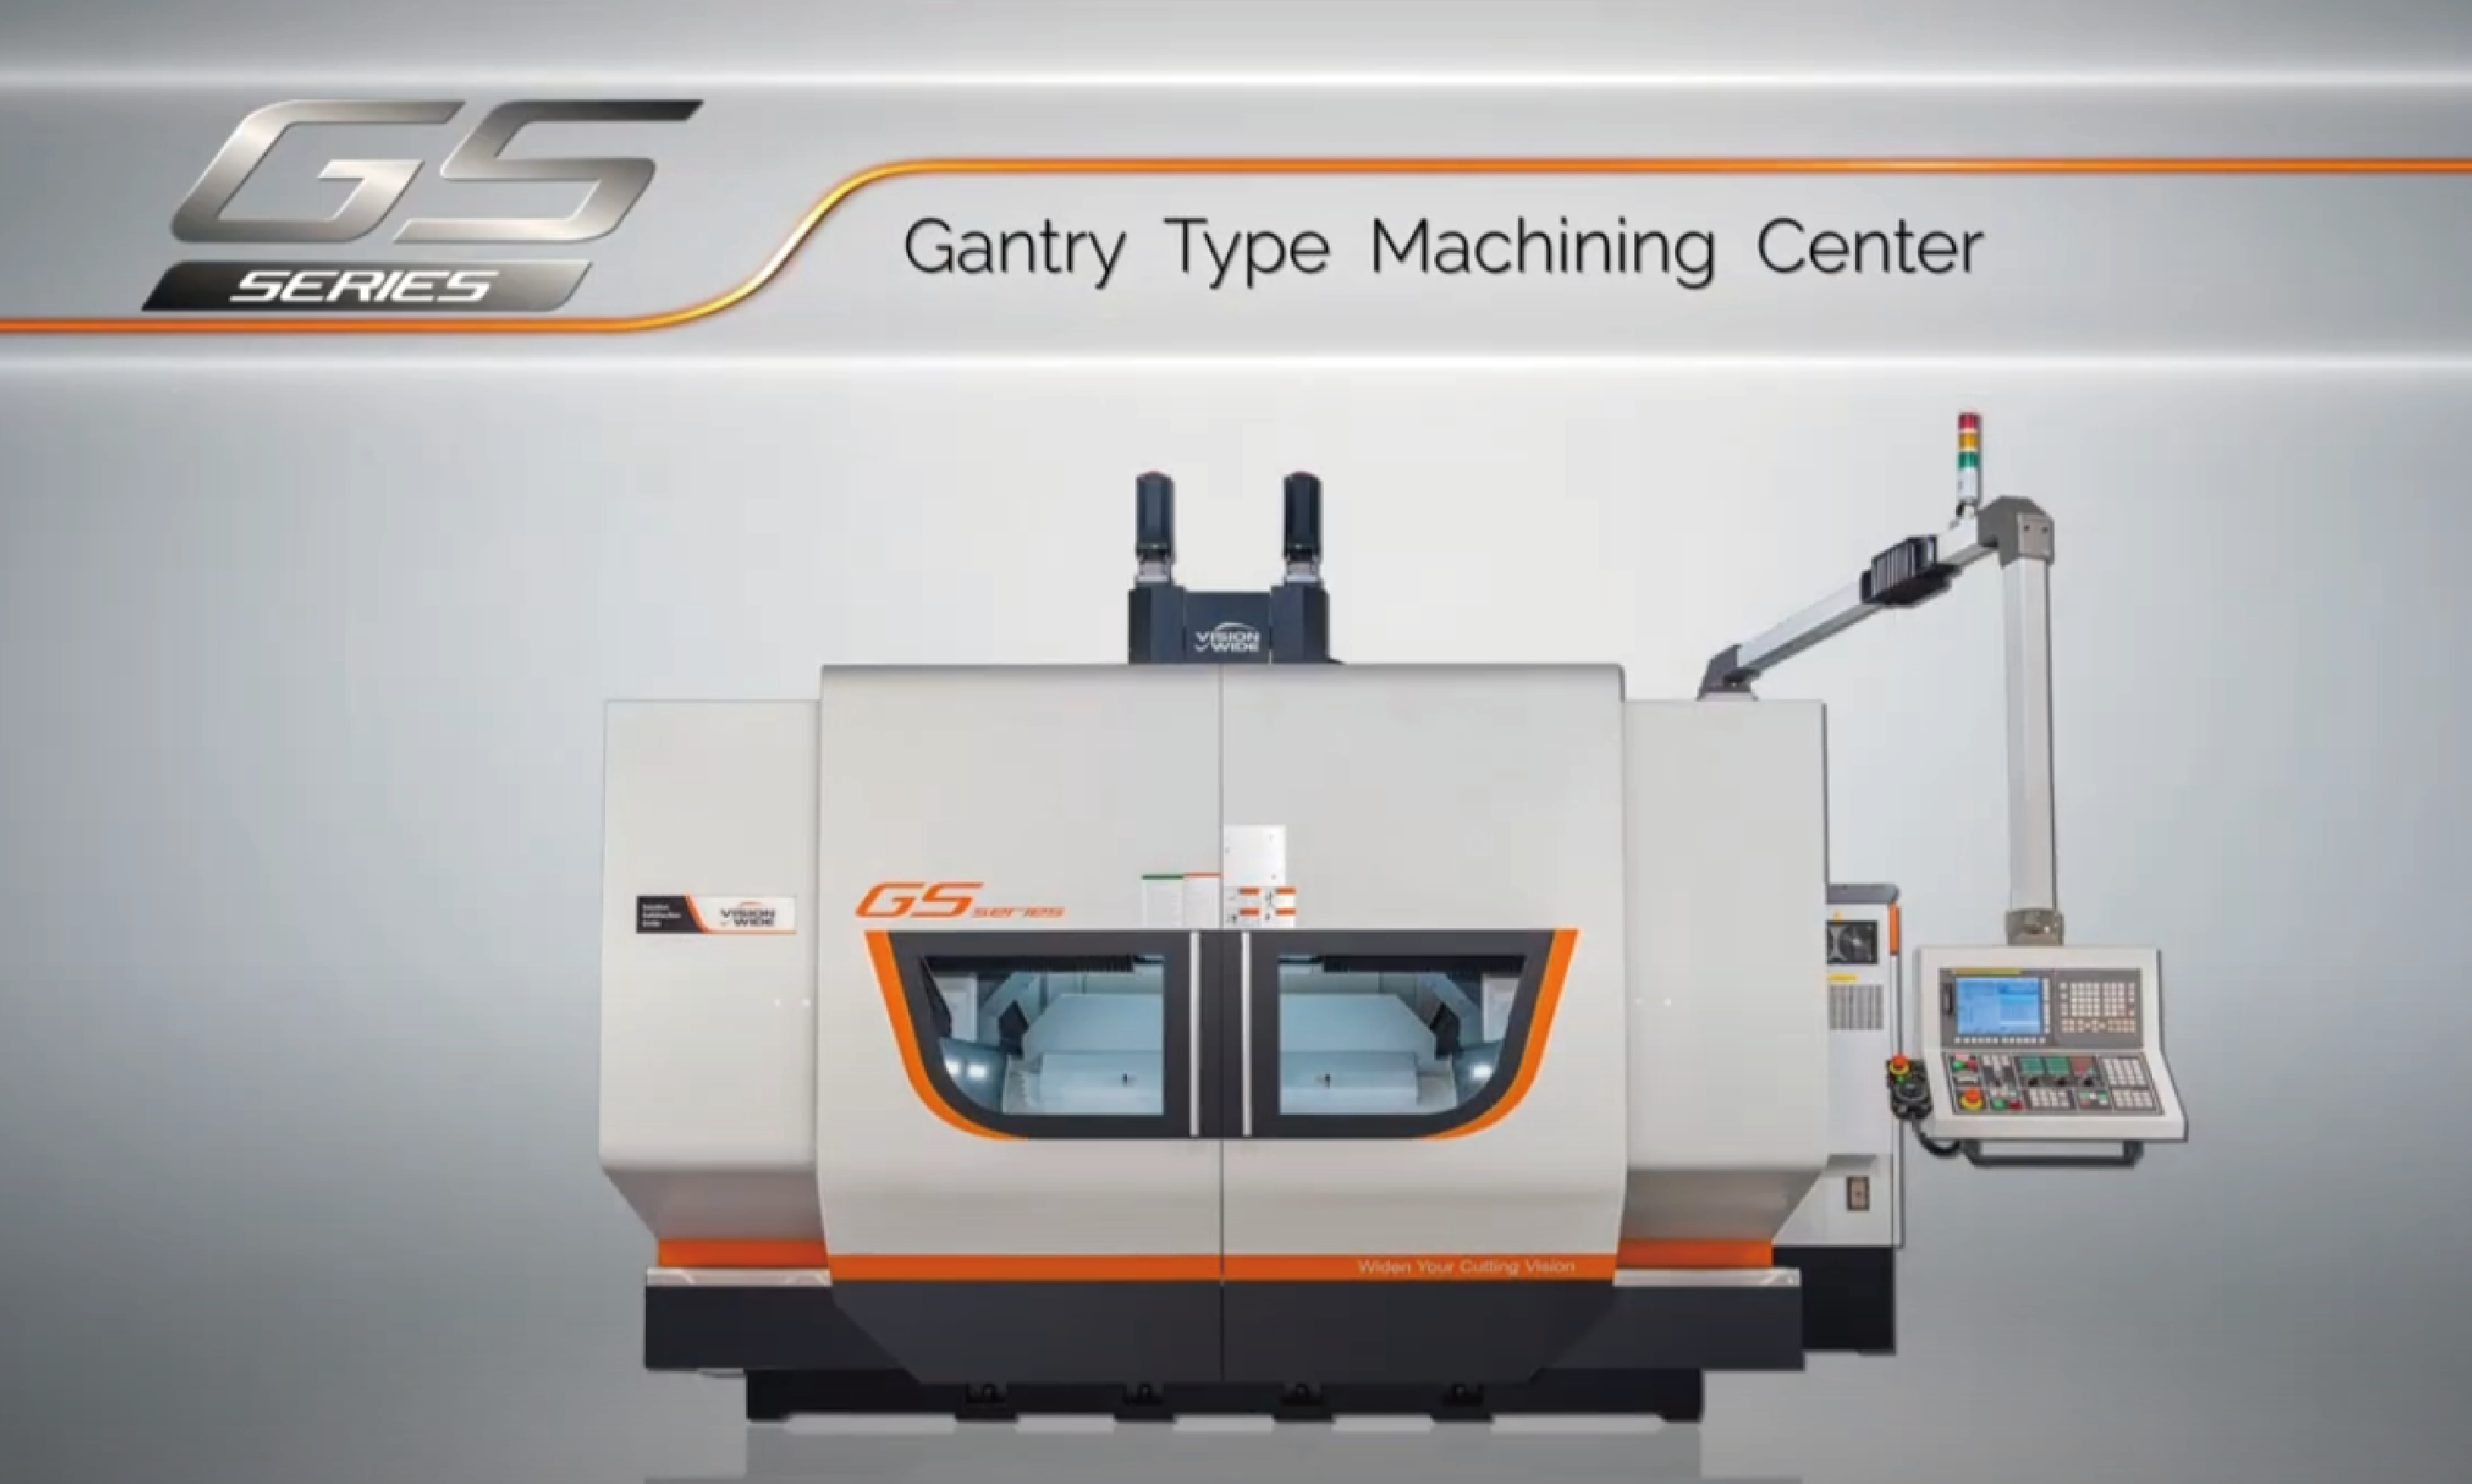 GS Gantry Type Machining Center 天車式高速型加工中心機